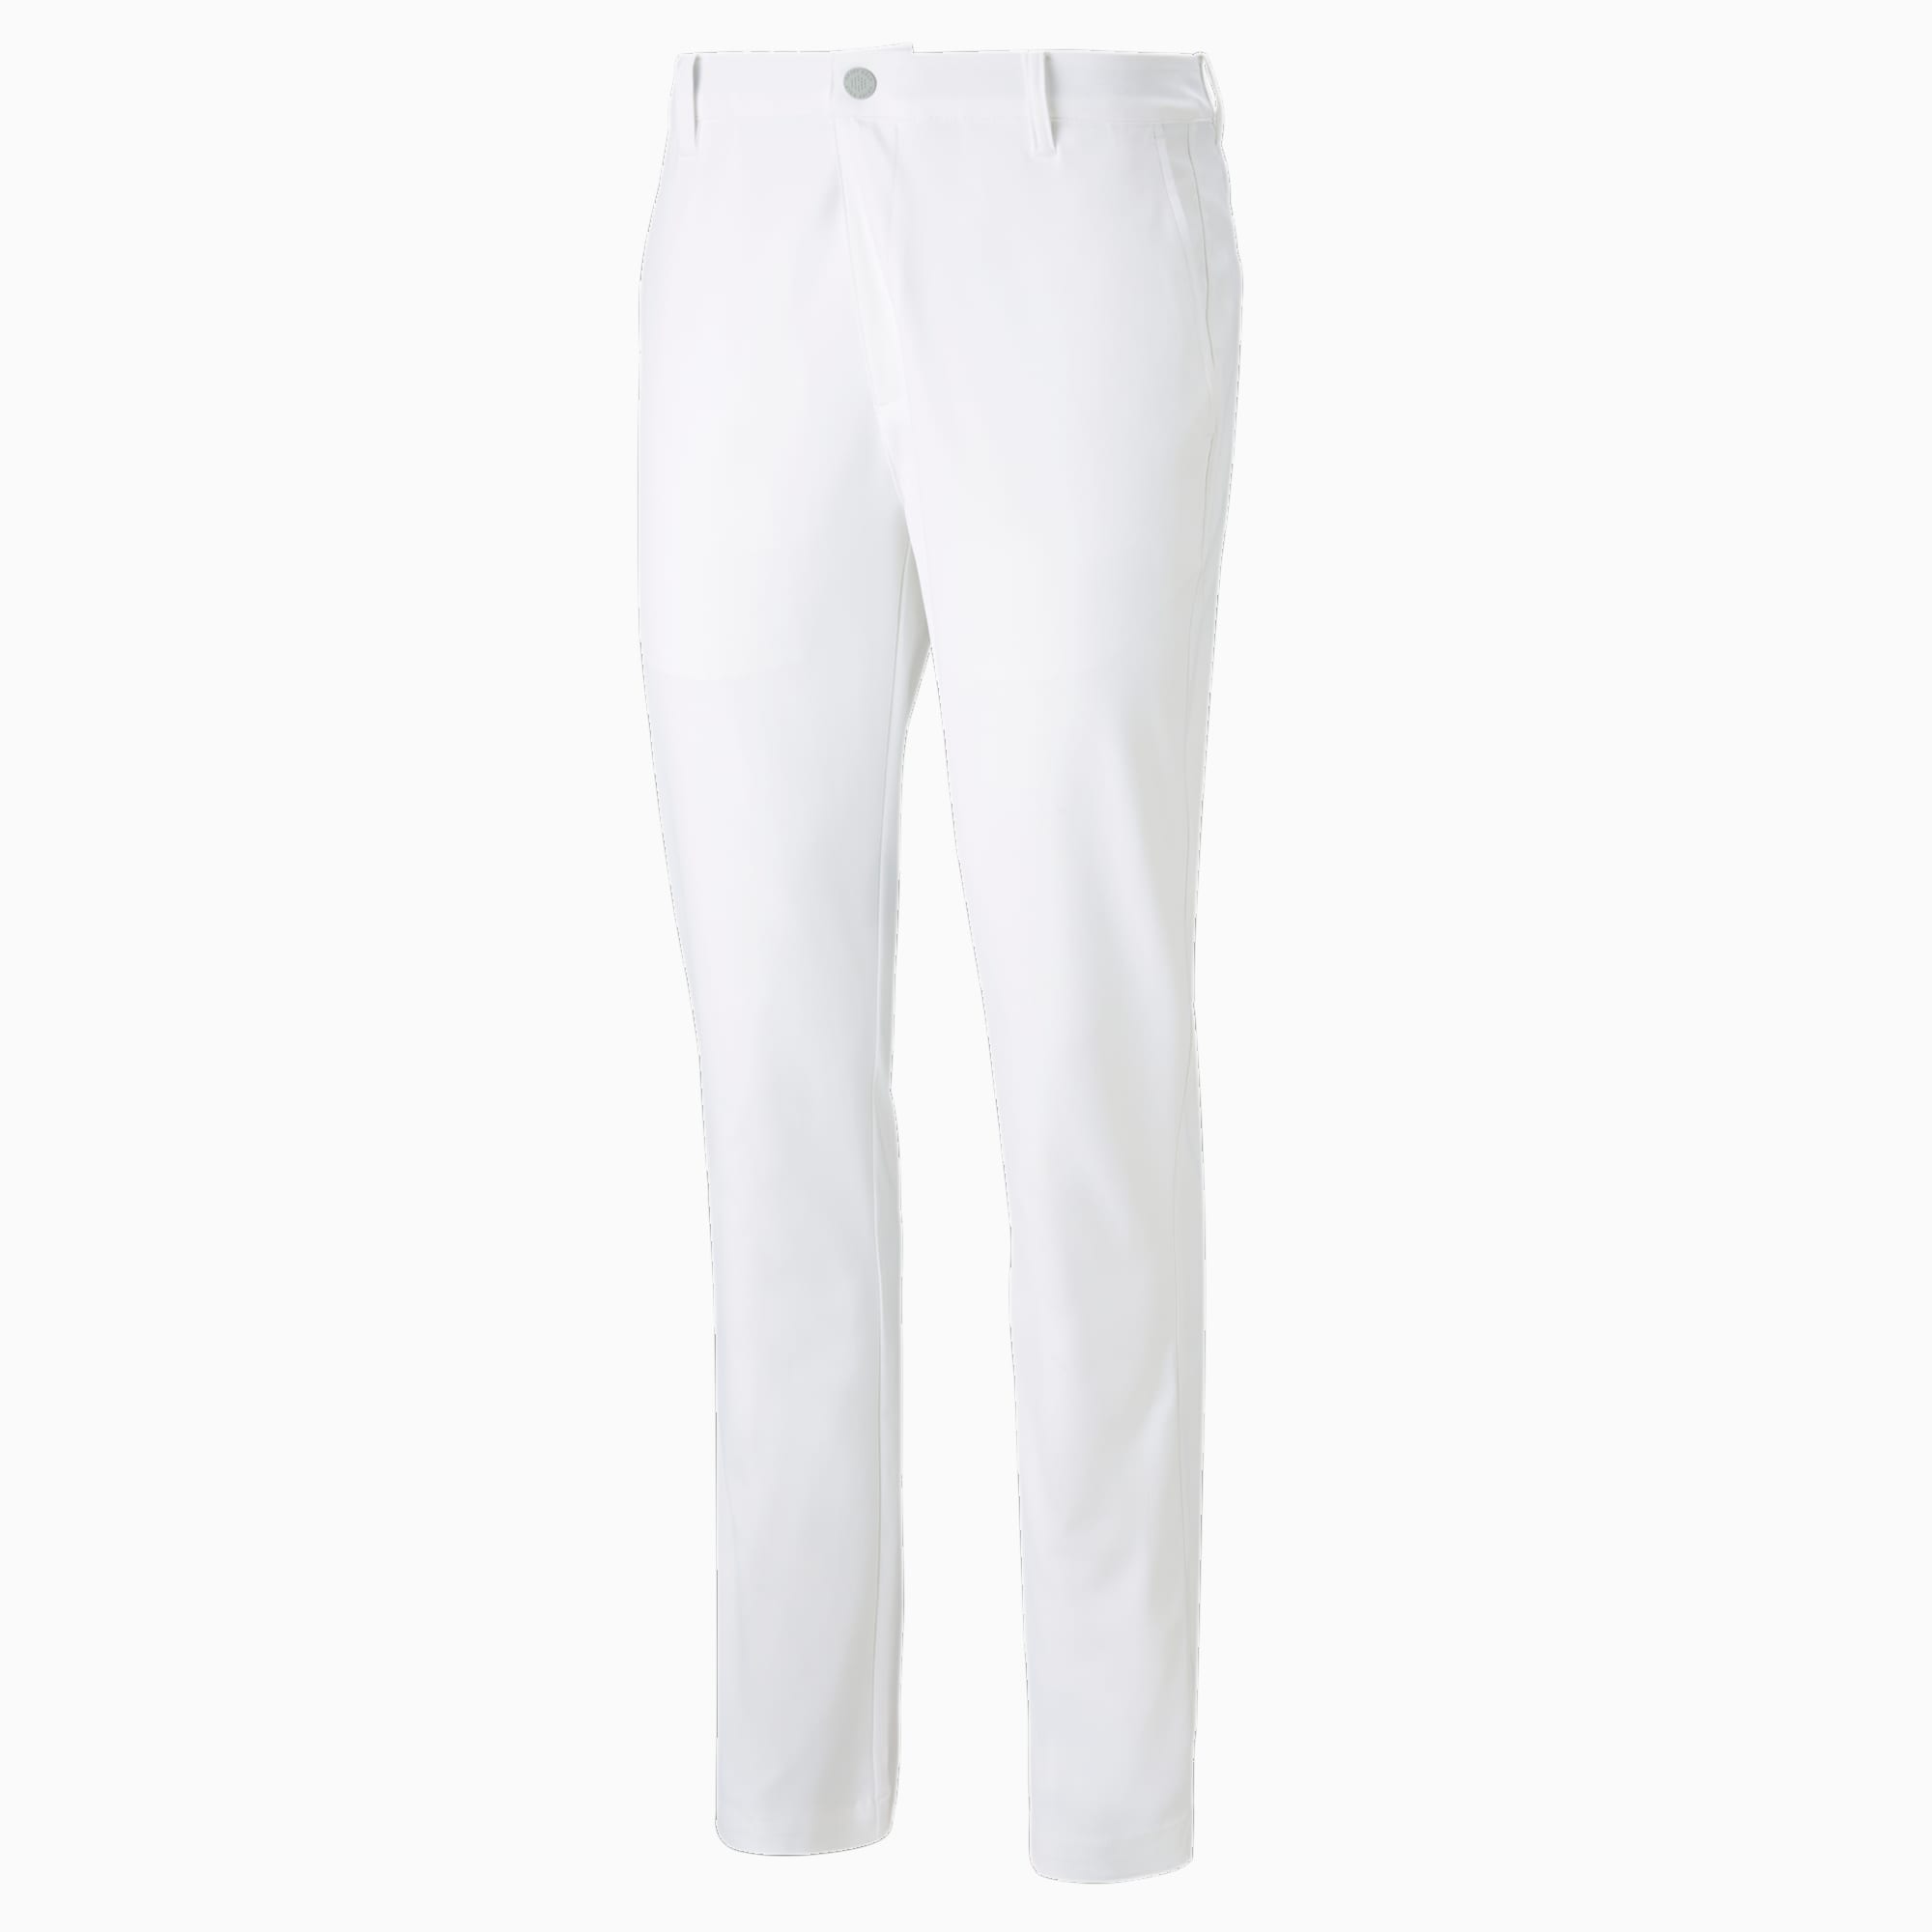 PUMA Dealer Tailored Golf Pants Men, White Glow, Size 35/34, Clothing